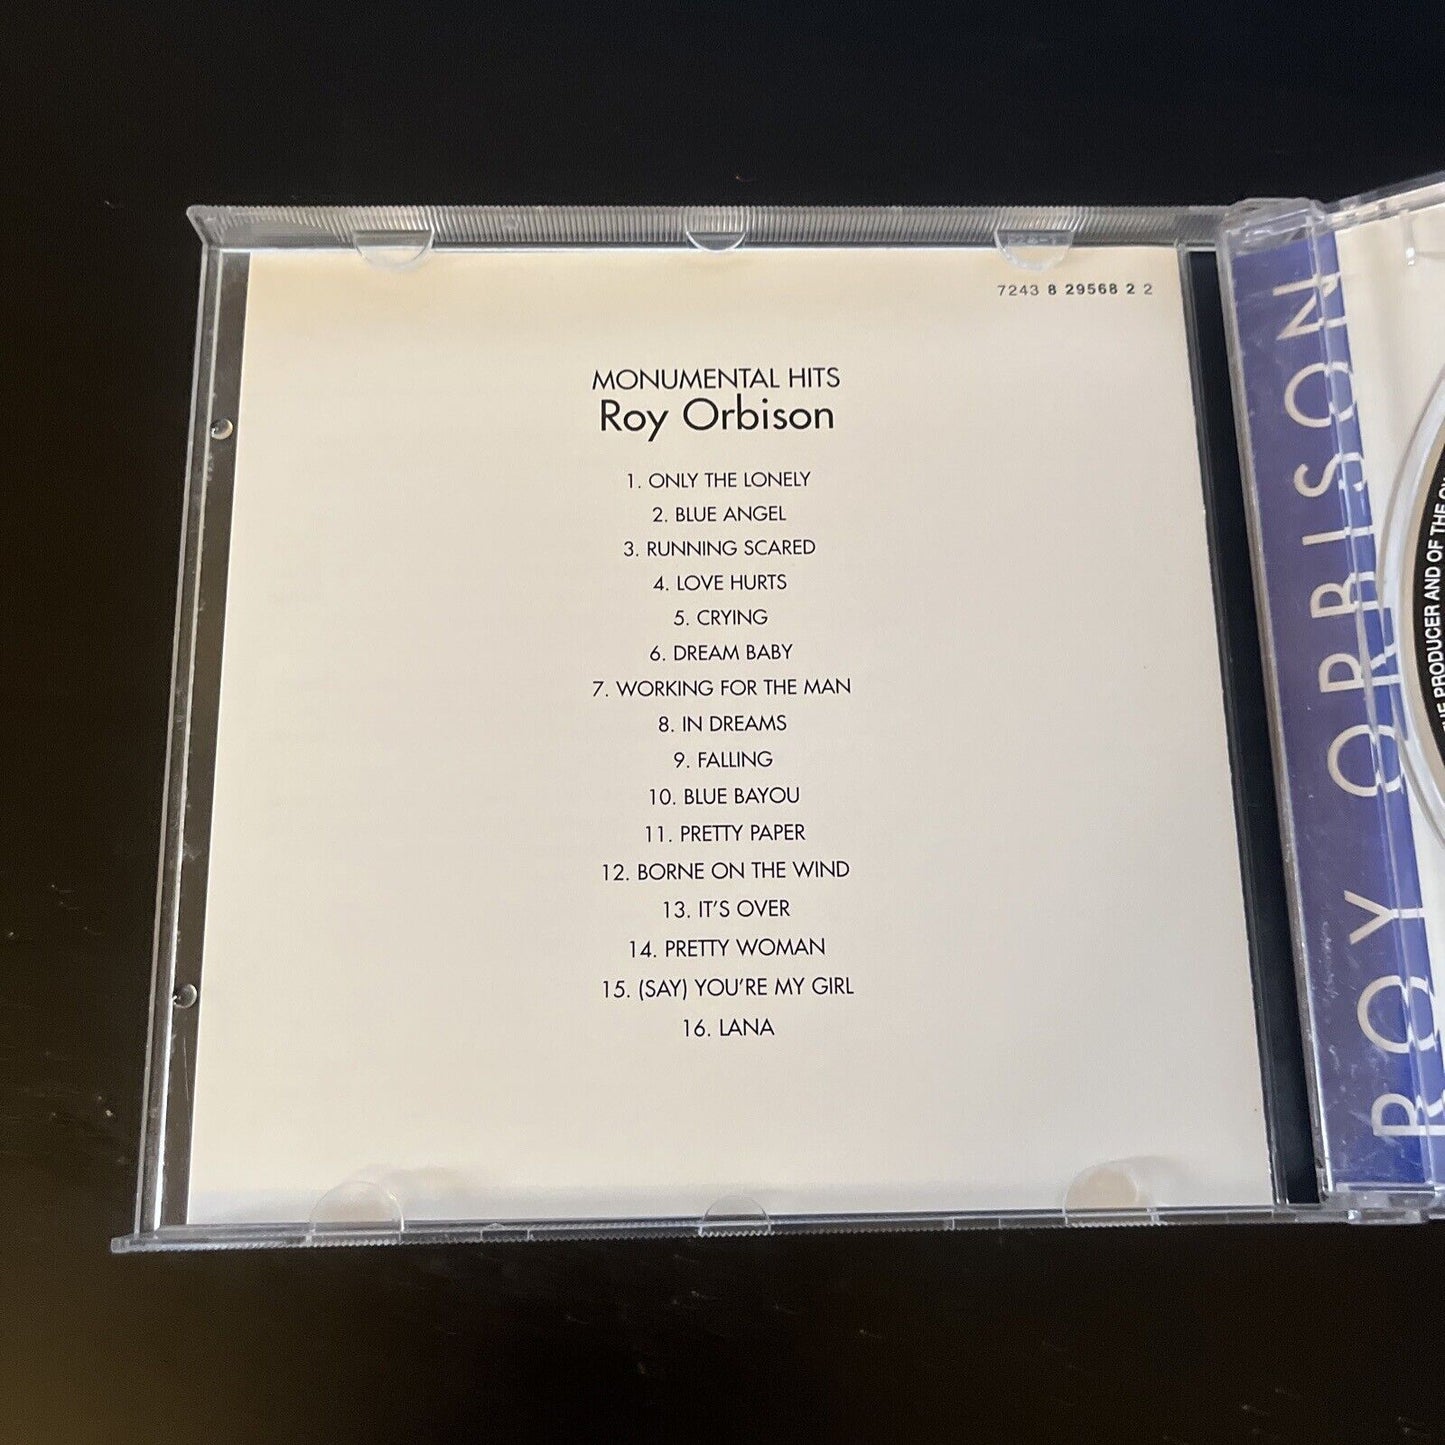 Roy Orbison - Monumental Hits (CD, 1989)